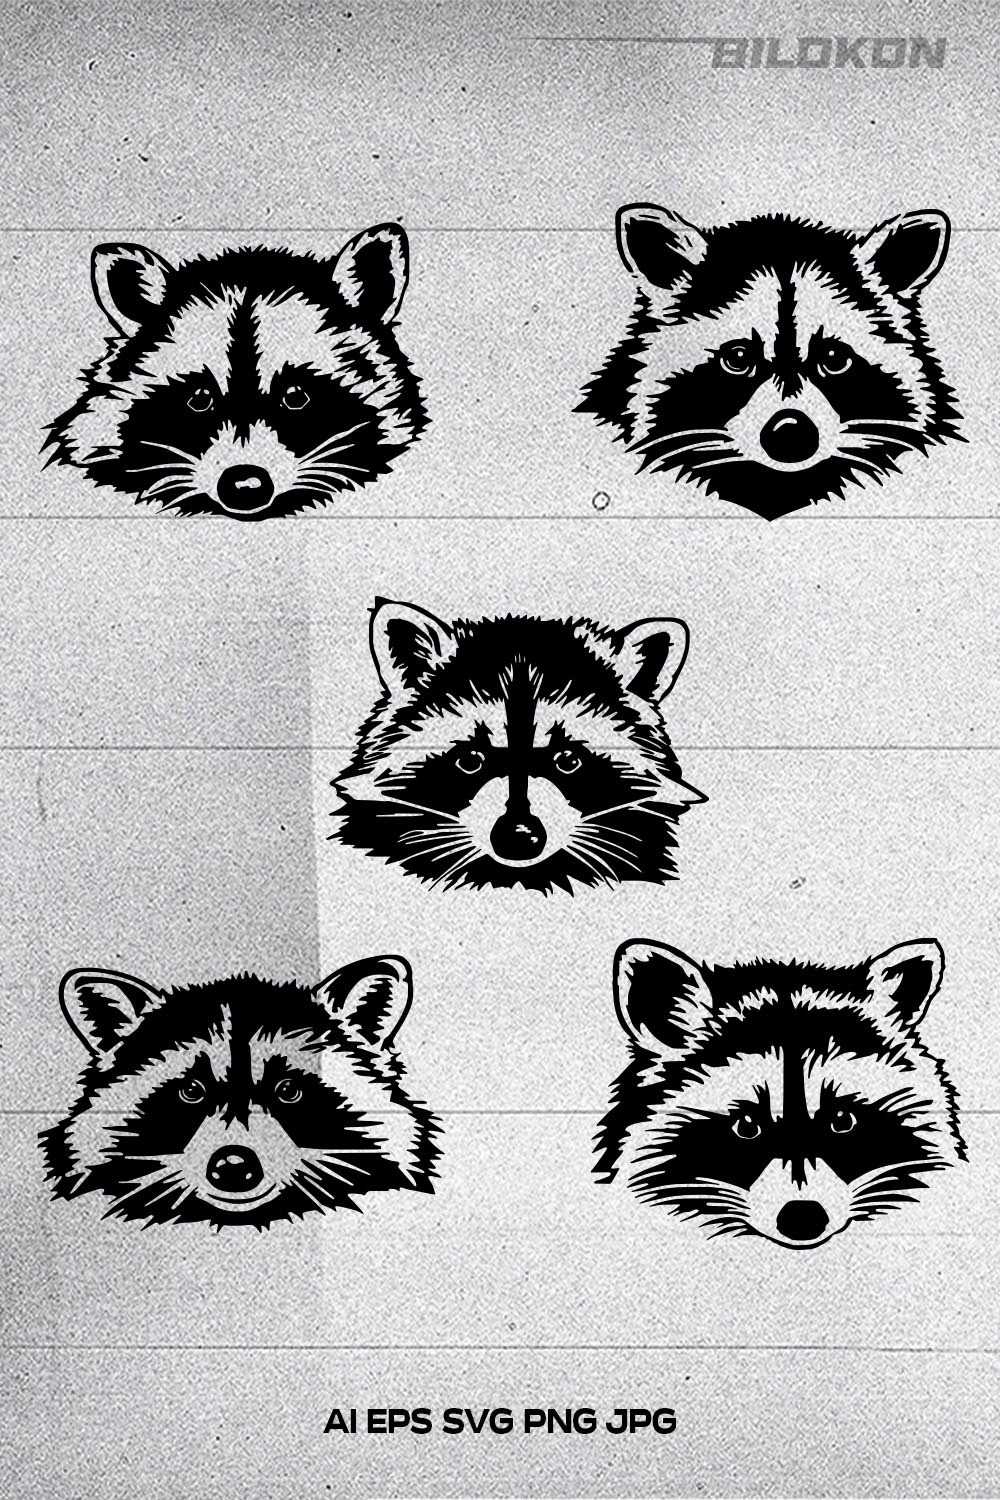 Raccoon head Vector illustration, SVG pinterest preview image.